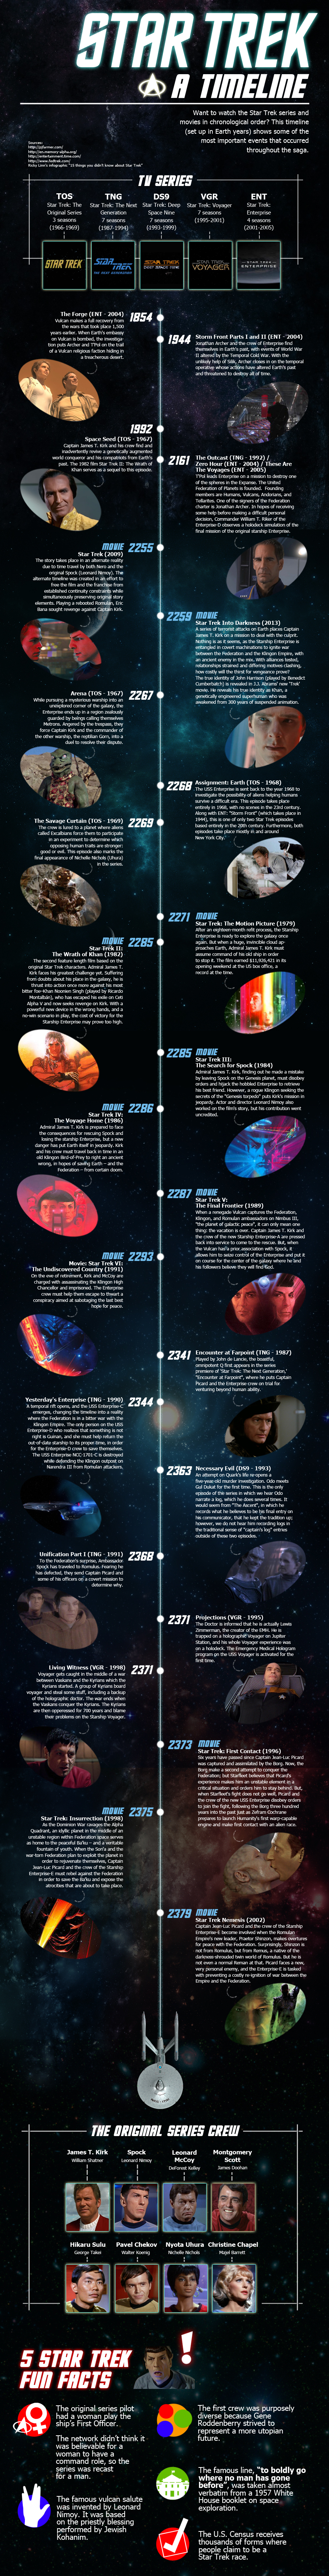 Star Trek Episodes Timeline For TV Shows & Movies